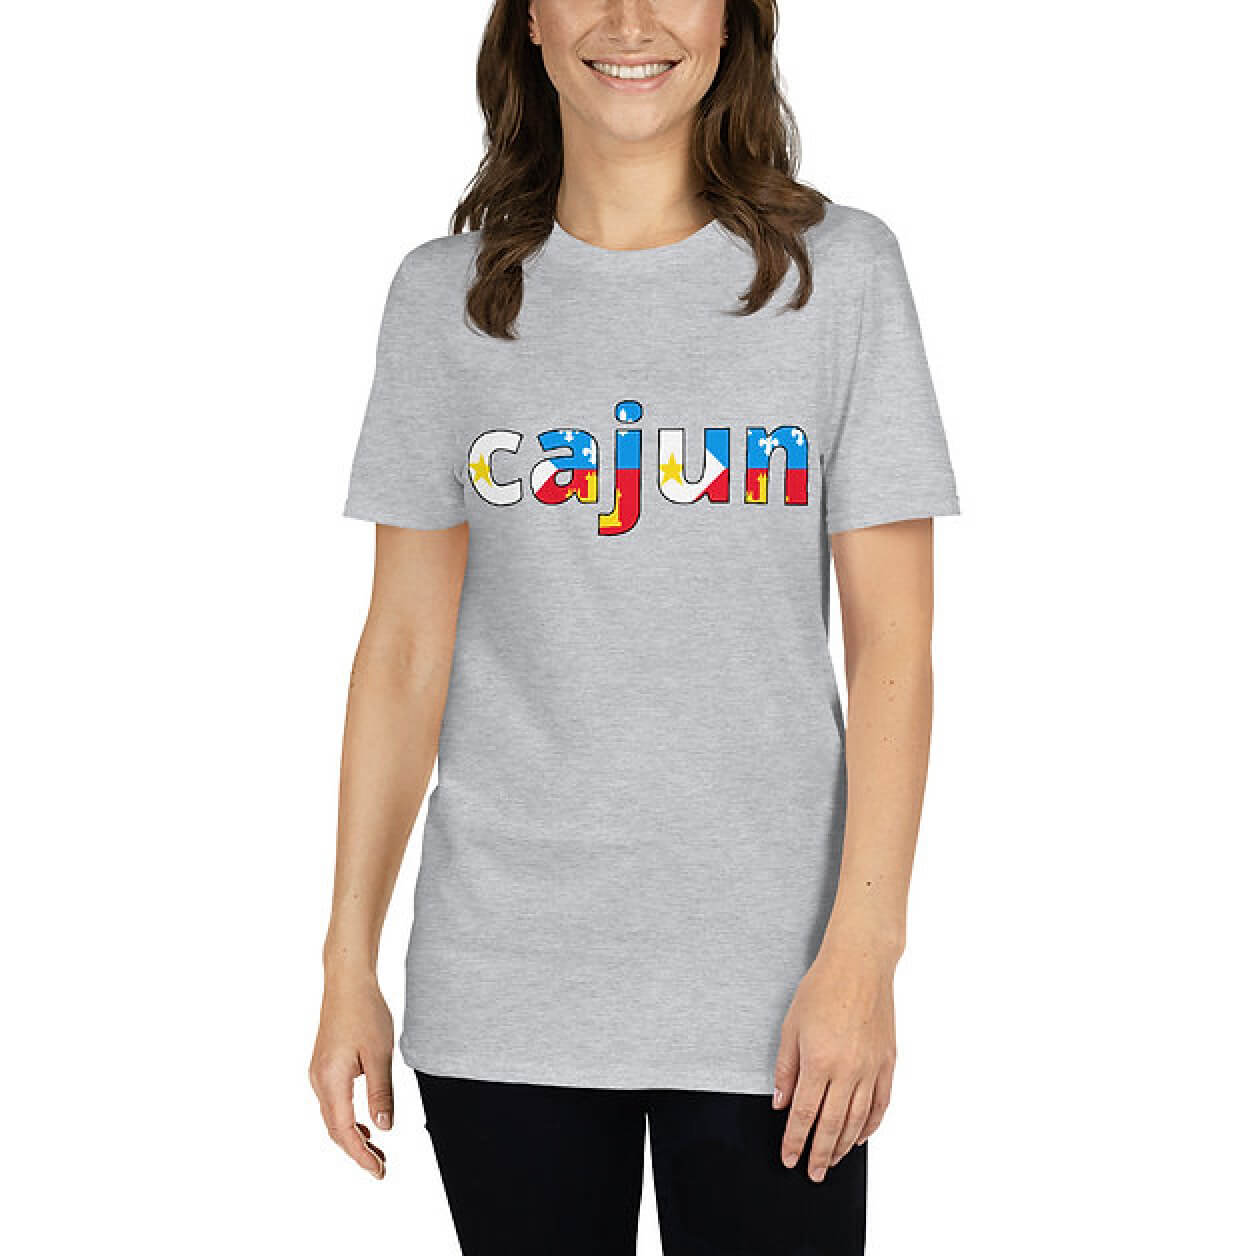 Short-sleeve unisex t-shirt with Cajun-inspired design